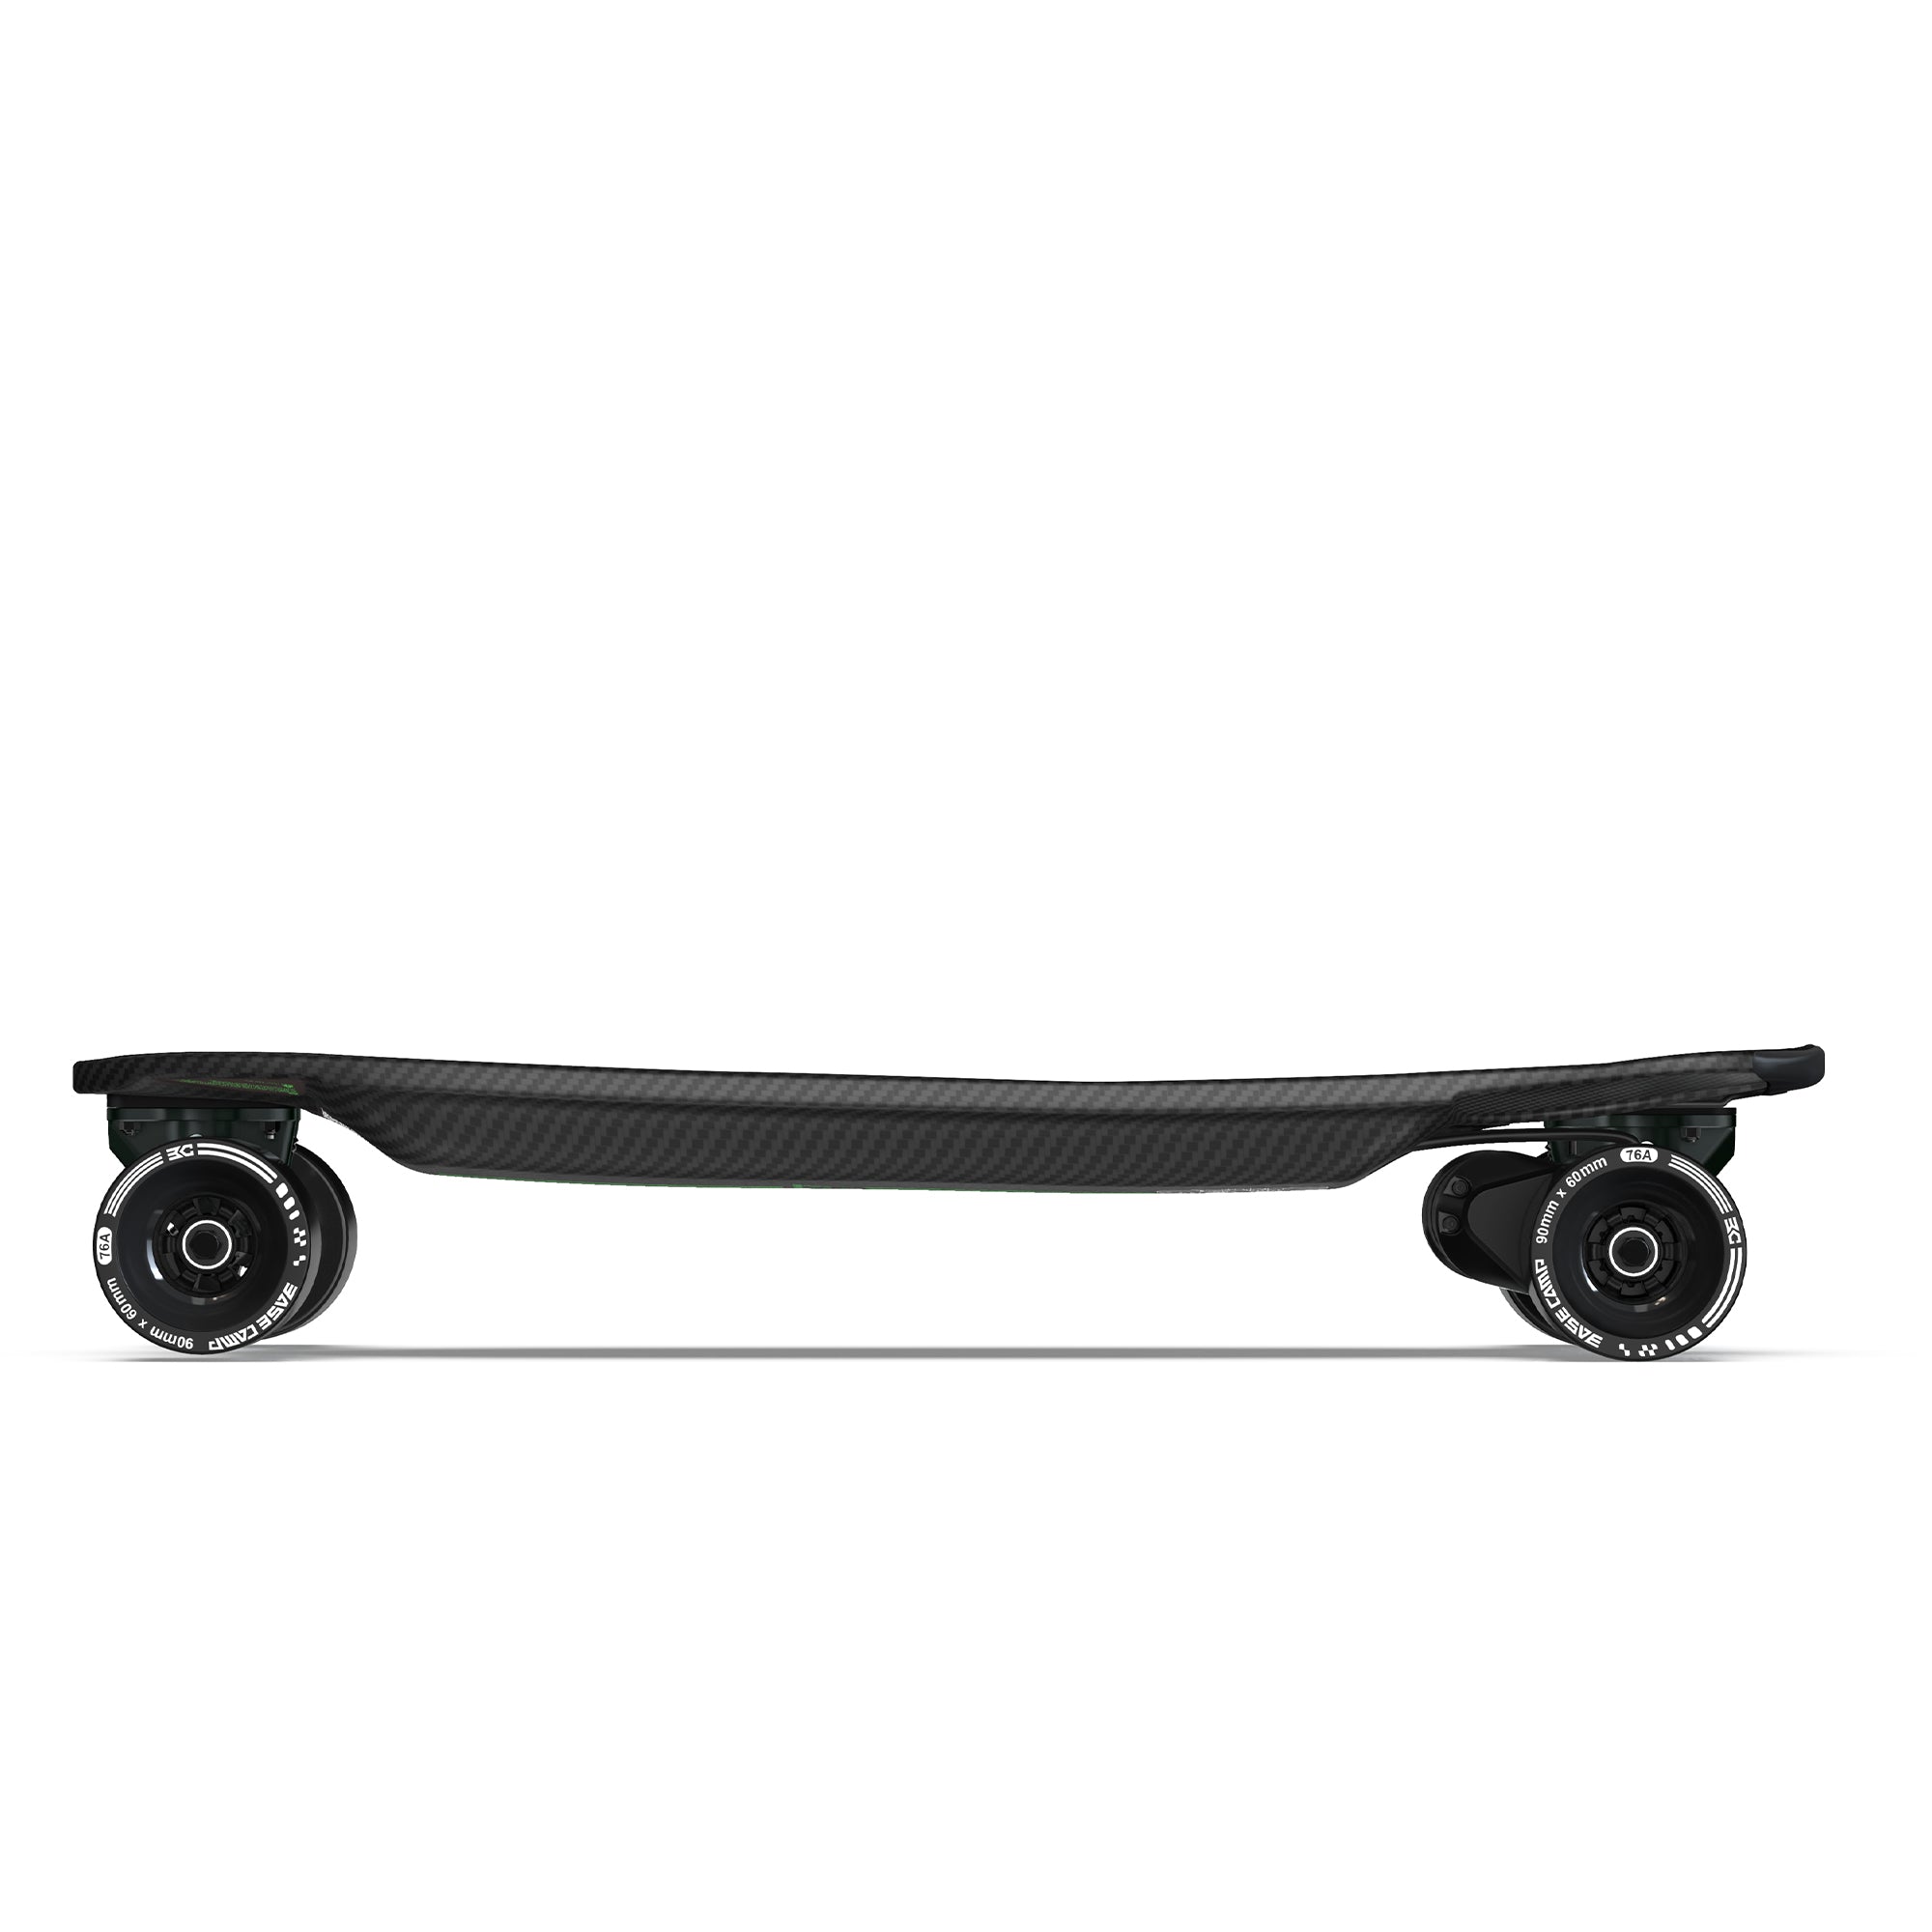 Fastest mini electric skateboard, electric skateboard, mini electric skateboard